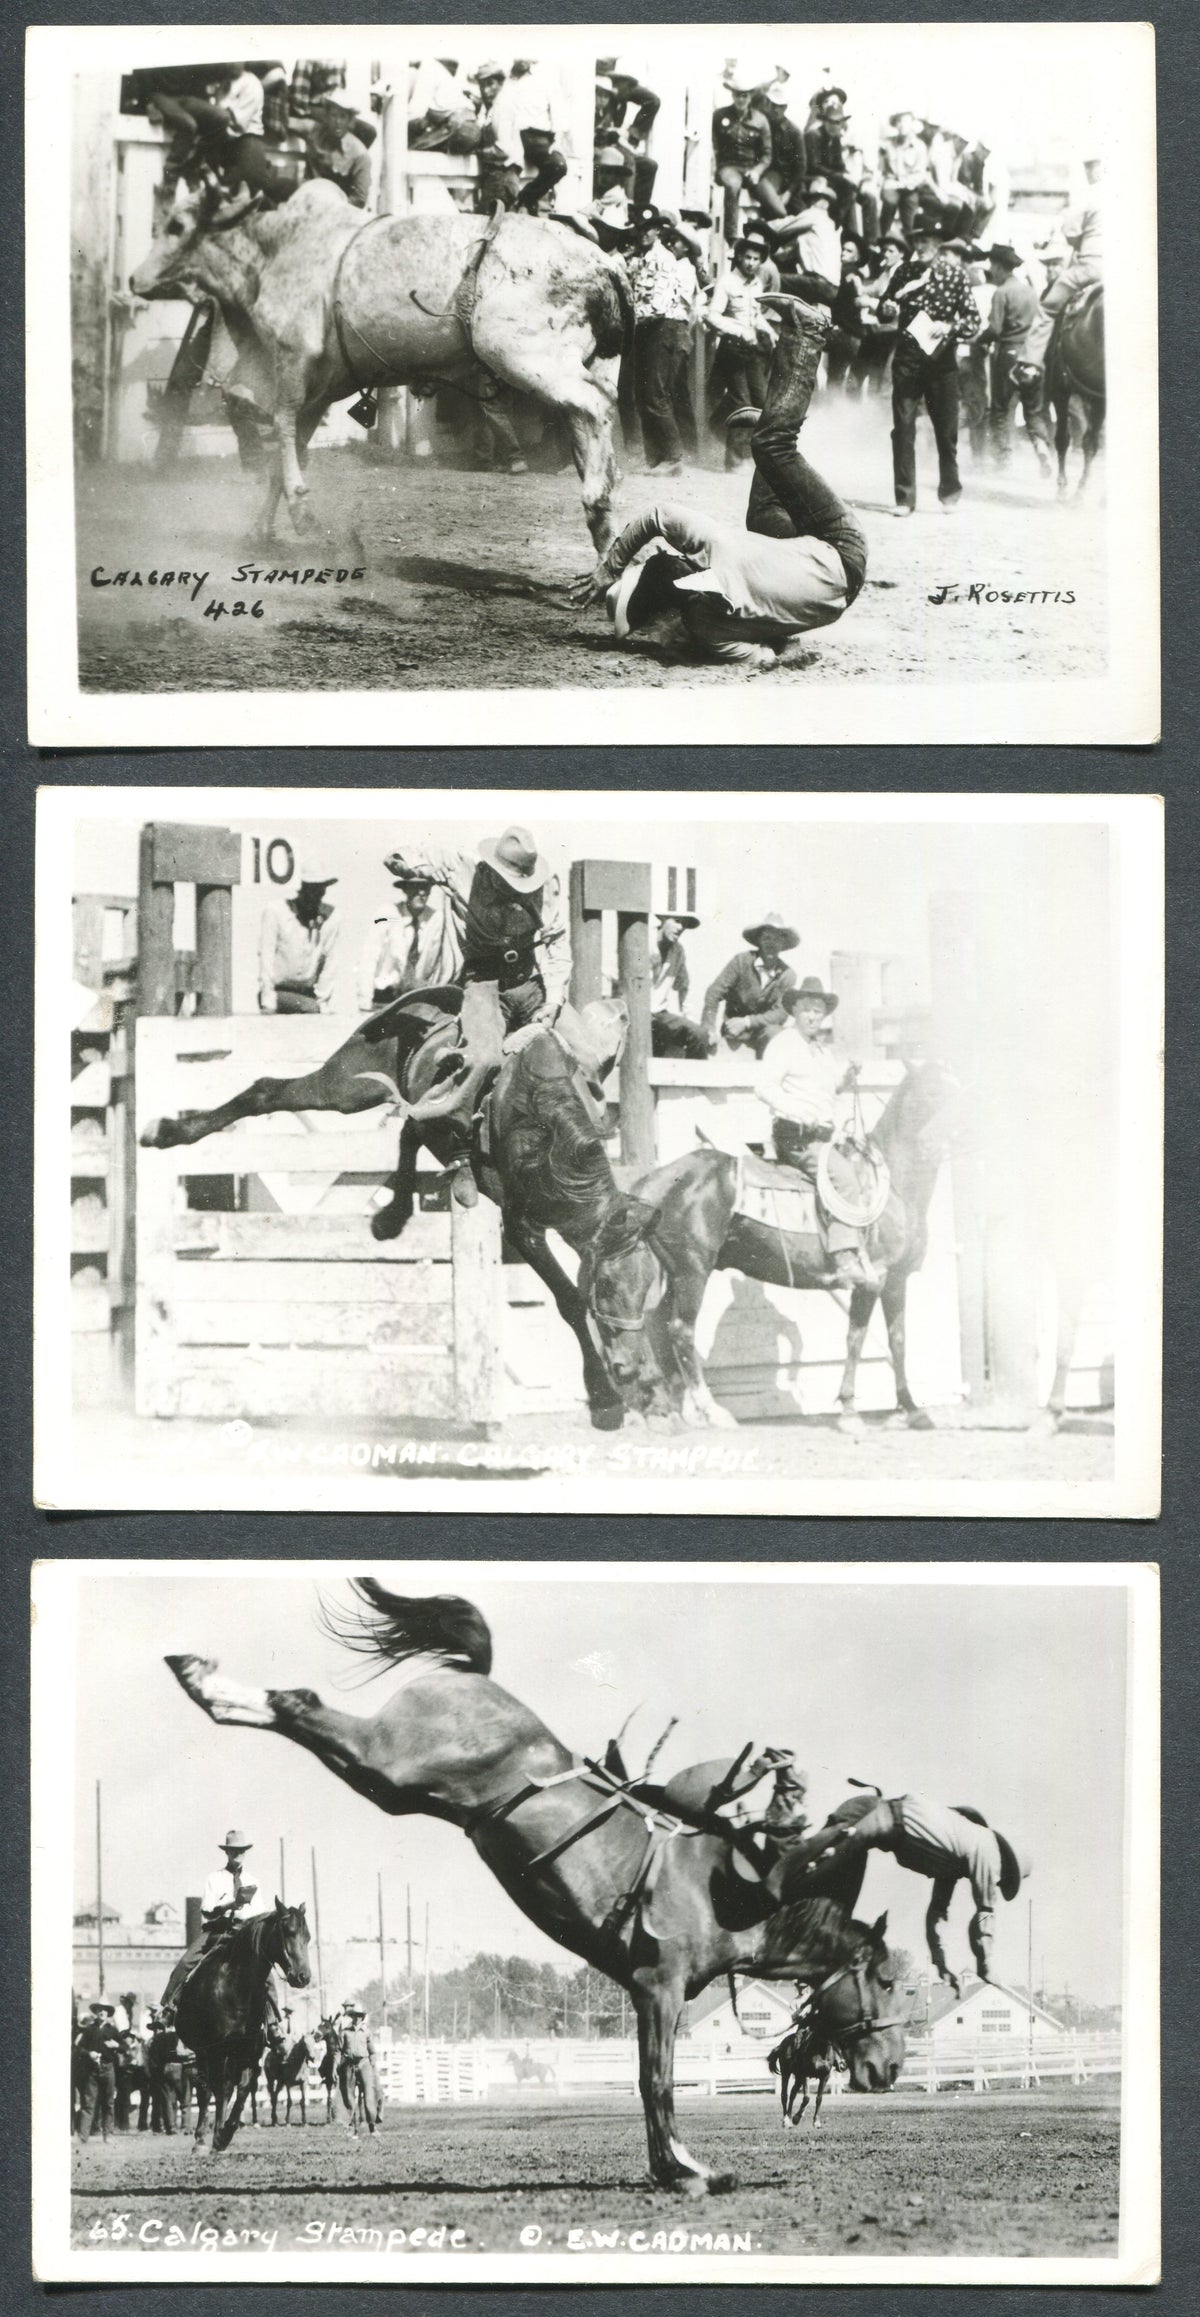 0001CS1910 - Calgary Stampede Postcard Collection